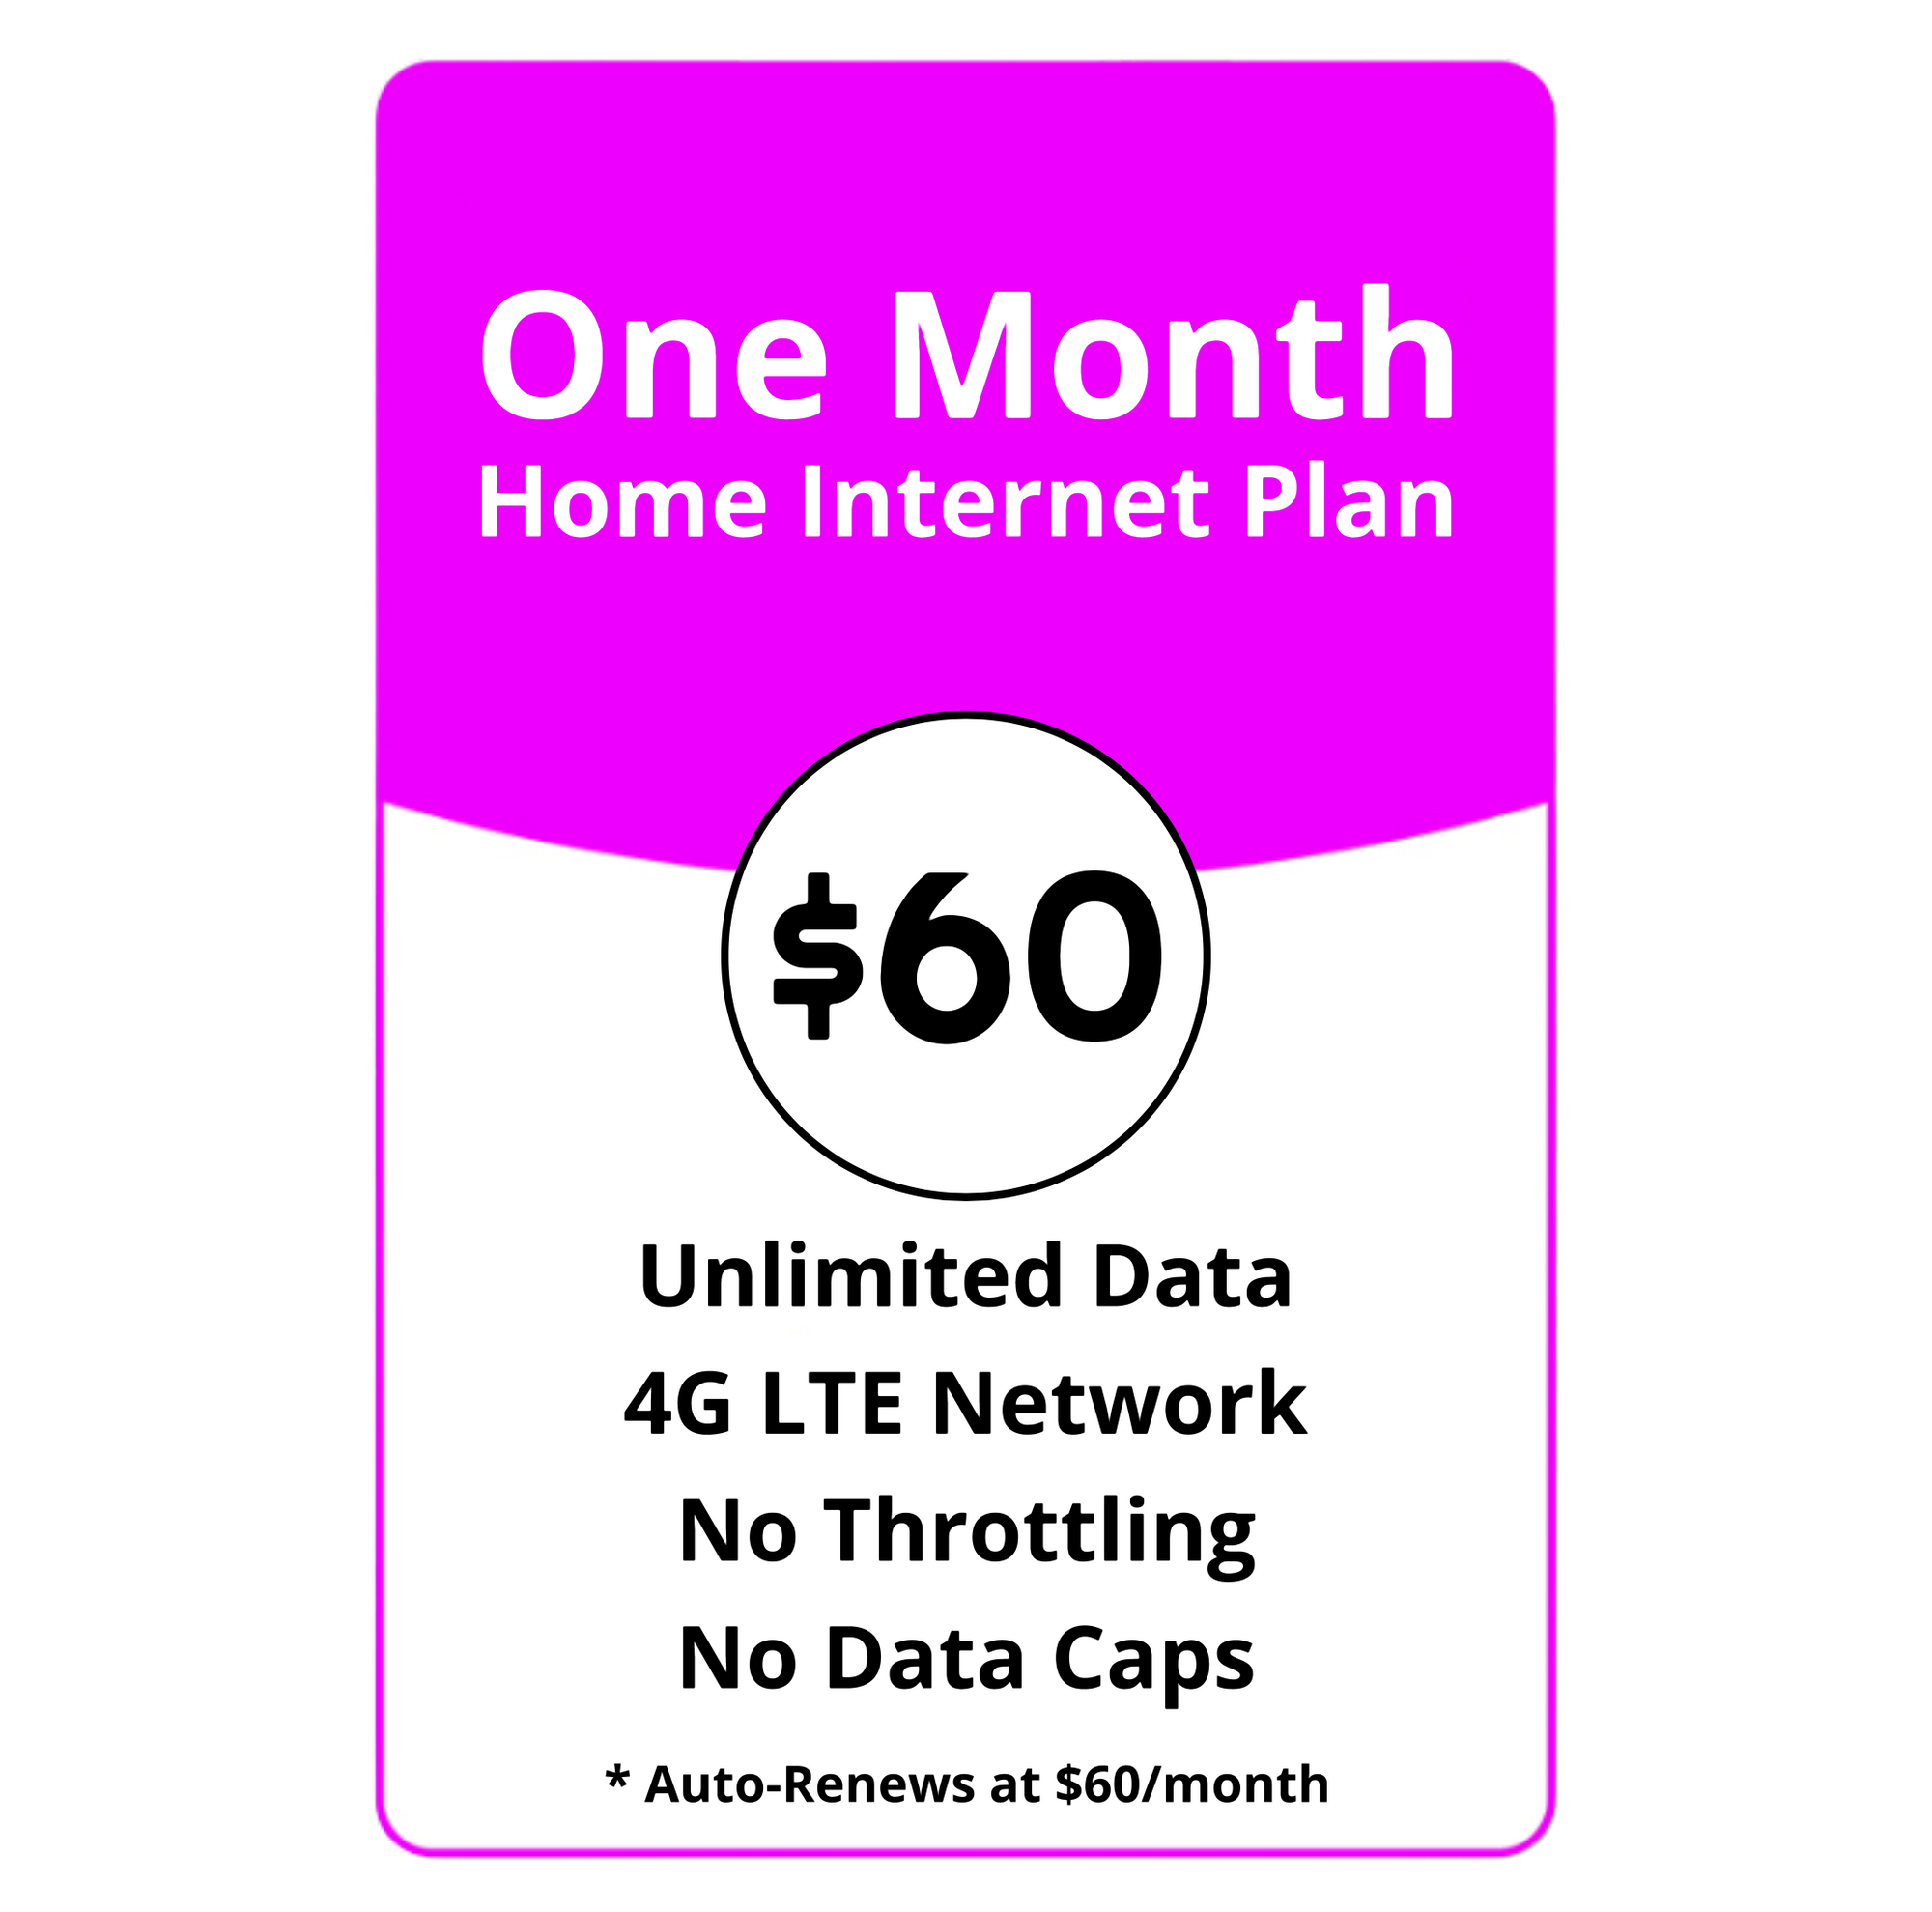 Home Internet Plan - 30 Days